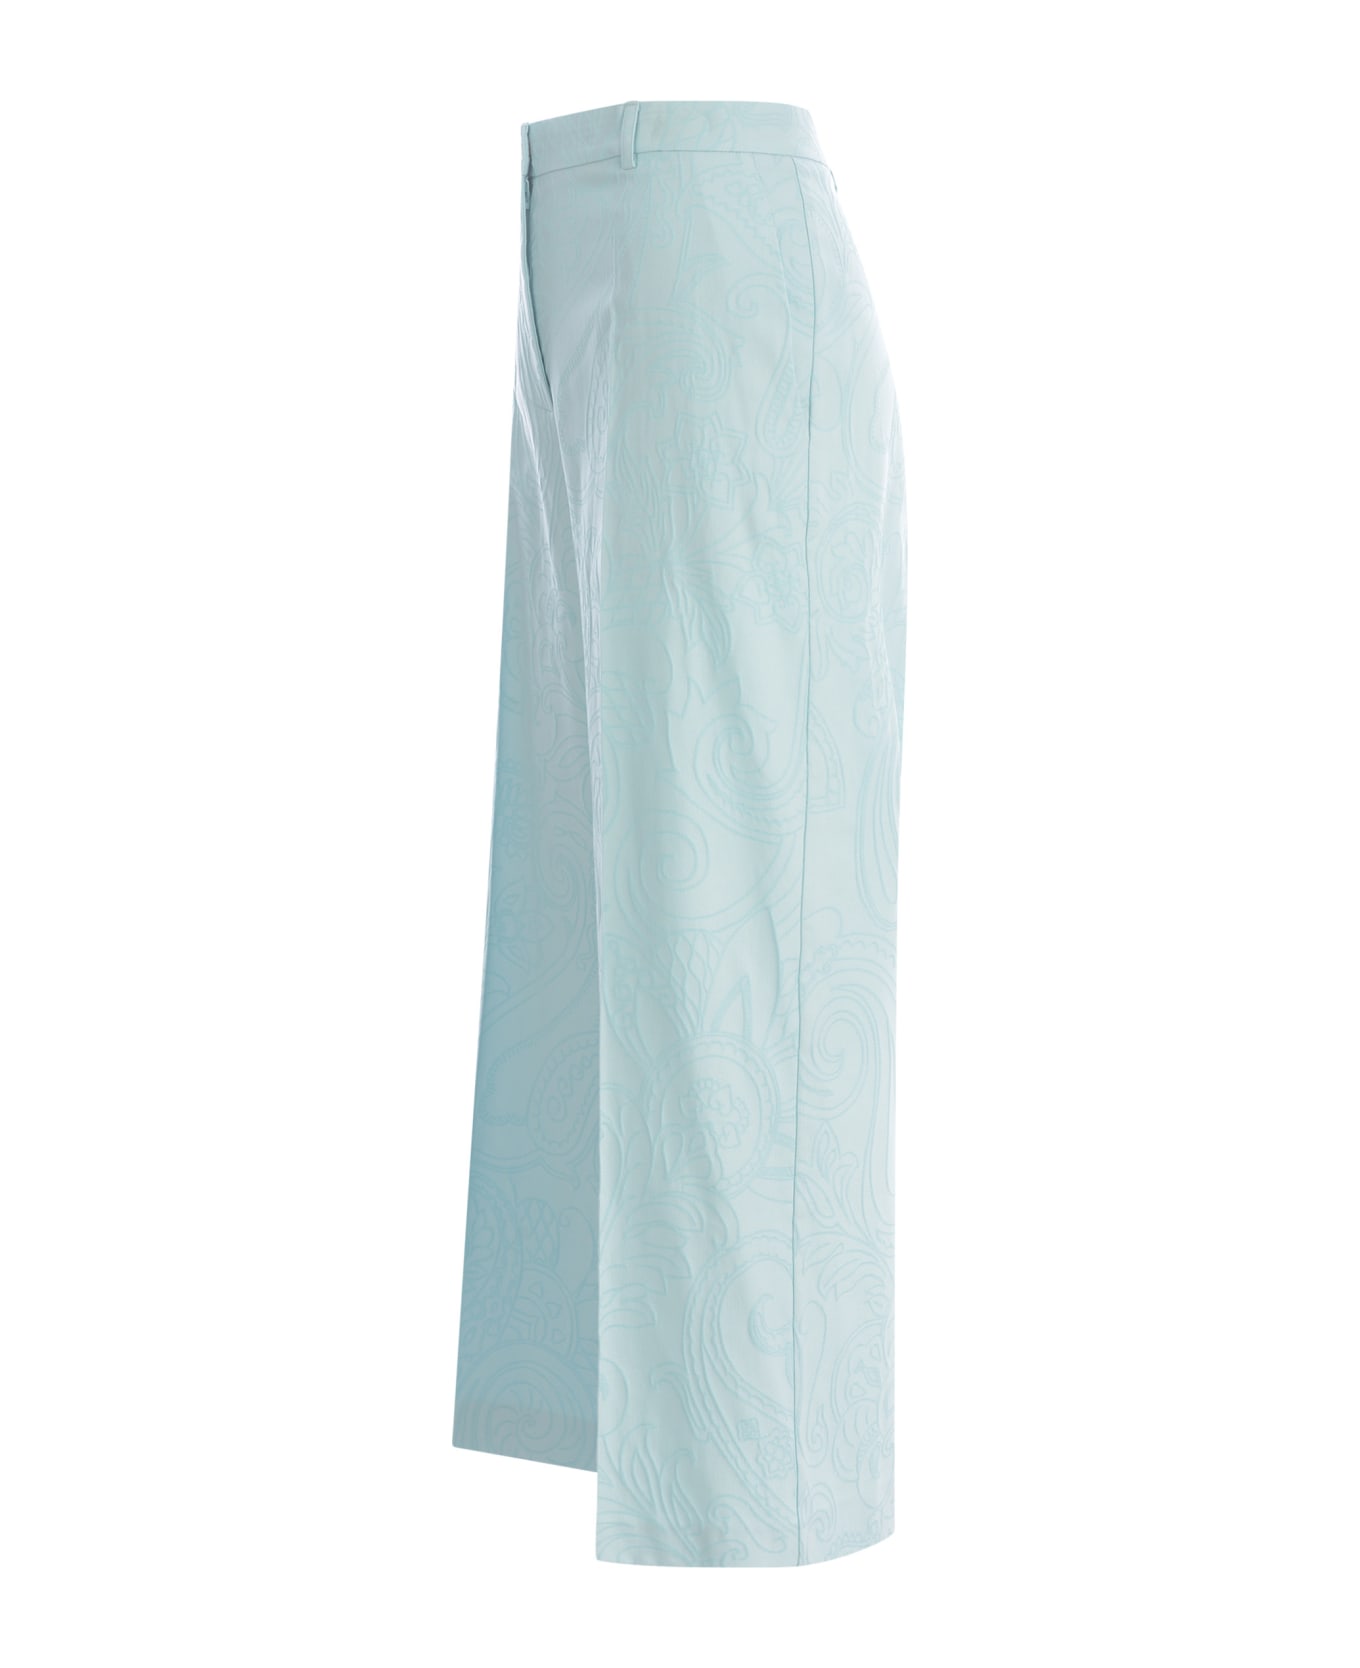 Etro Pastel Light-blue Stretch Cotton Blend Cropped-cut Pant - LIGHTBLUE ボトムス